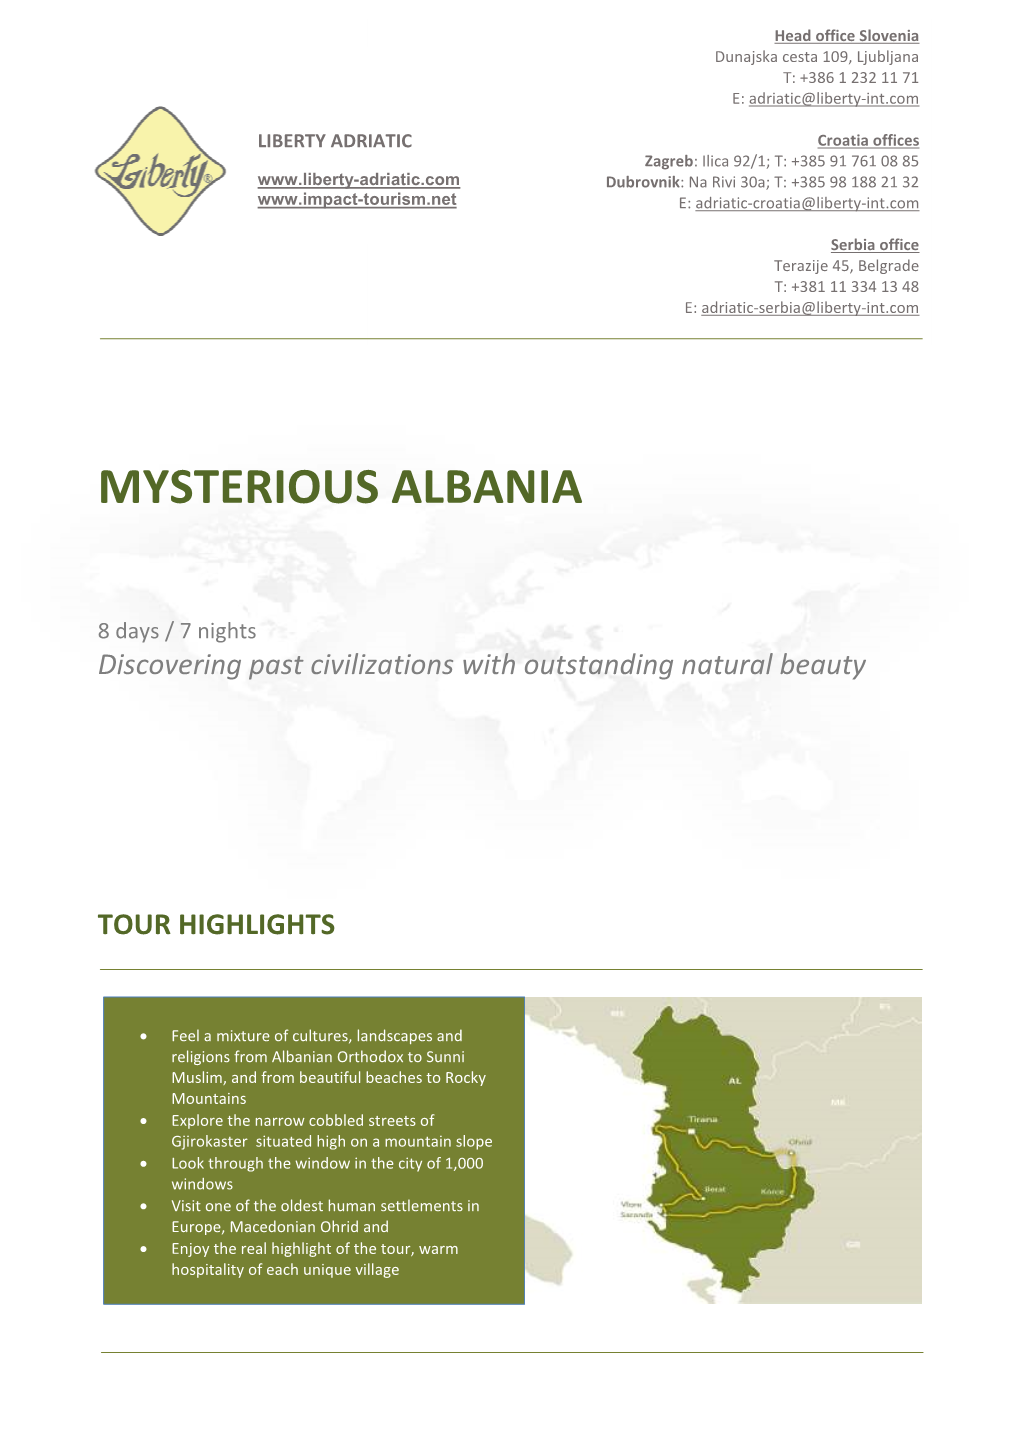 Mysterious Albania